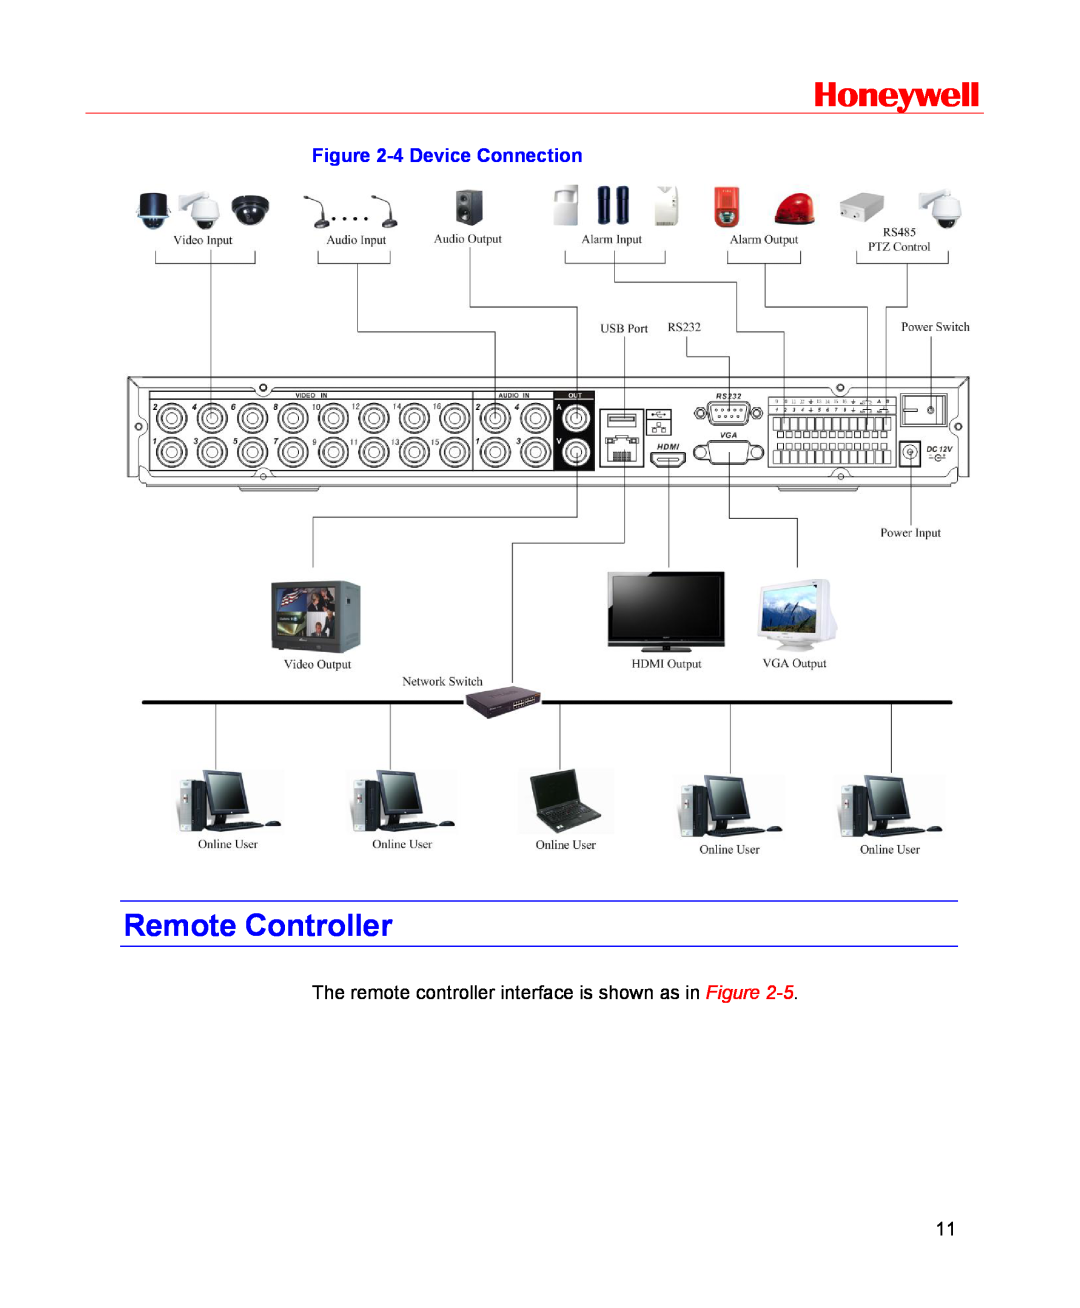 Honeywell HSVR-16, HSVR-04 user manual Remote Controller, Honeywell, 4 Device Connection 